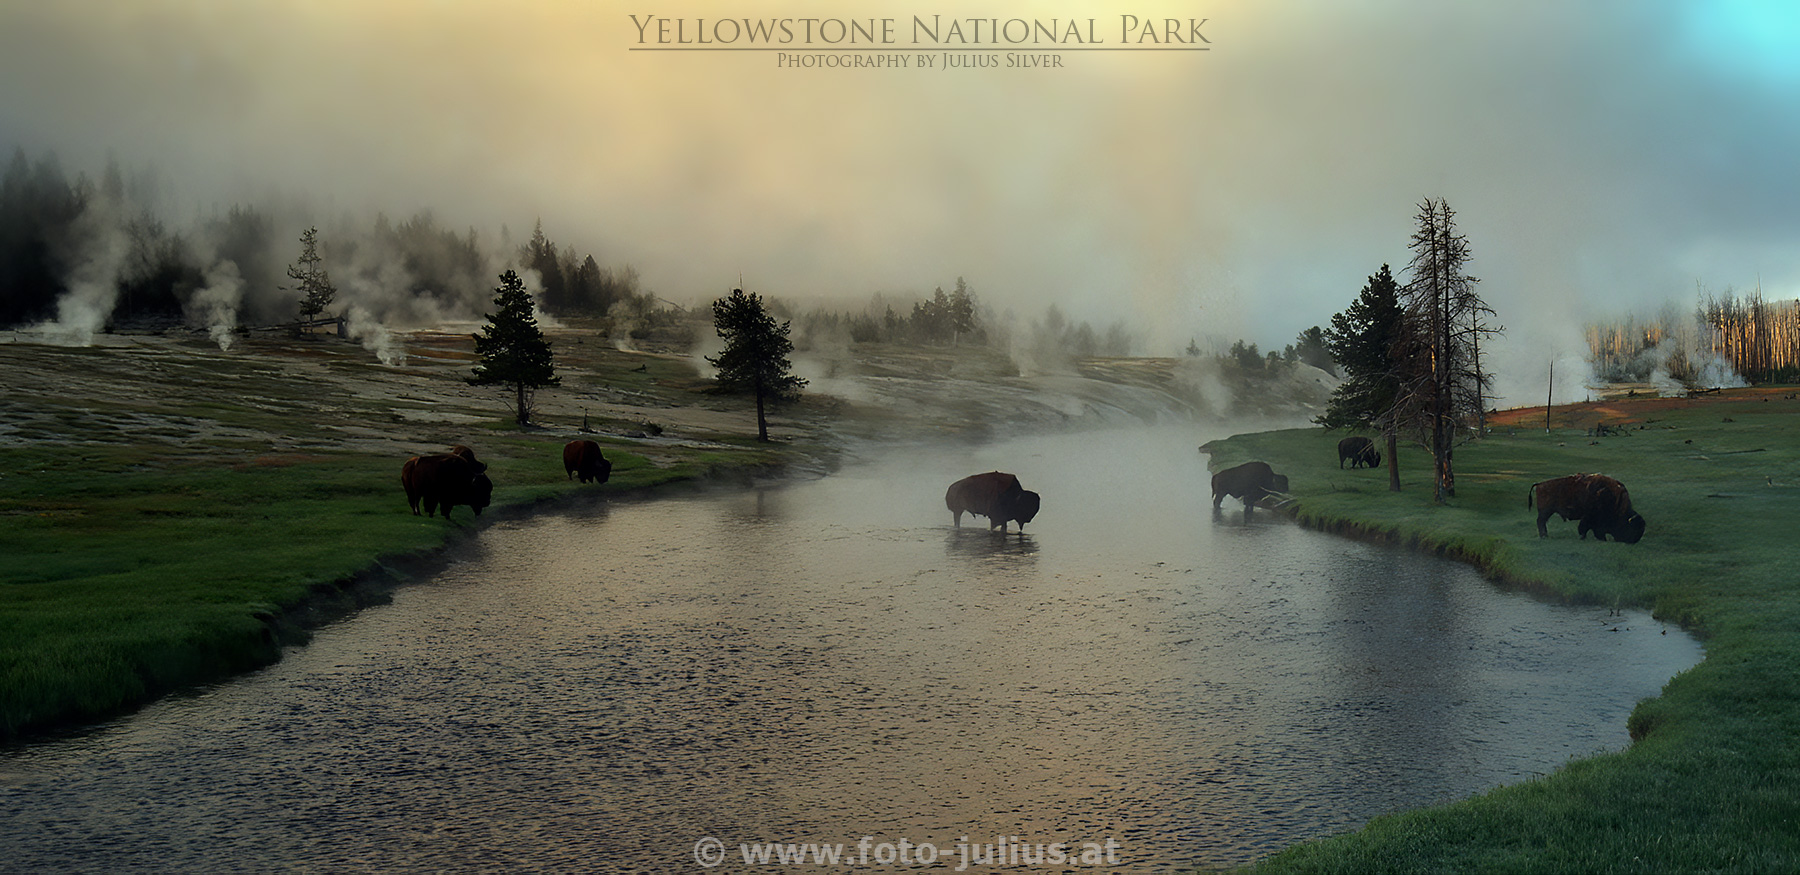 y102a_Bisons_Yellowstone.jpg, 546kB